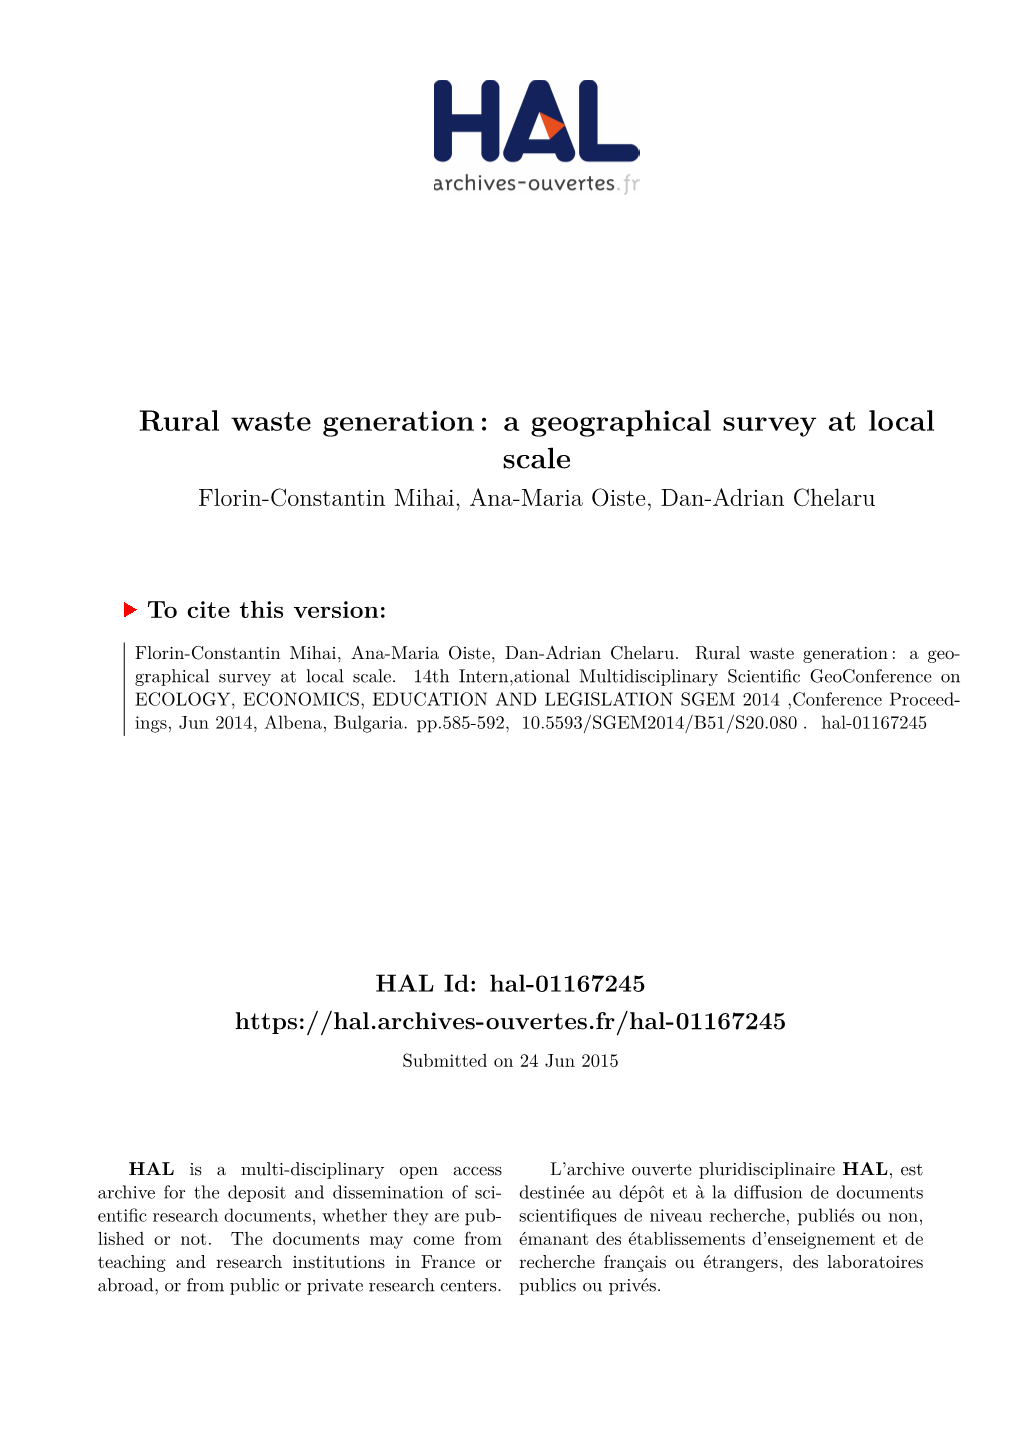 Rural Waste Generation : a Geographical Survey at Local Scale Florin-Constantin Mihai, Ana-Maria Oiste, Dan-Adrian Chelaru